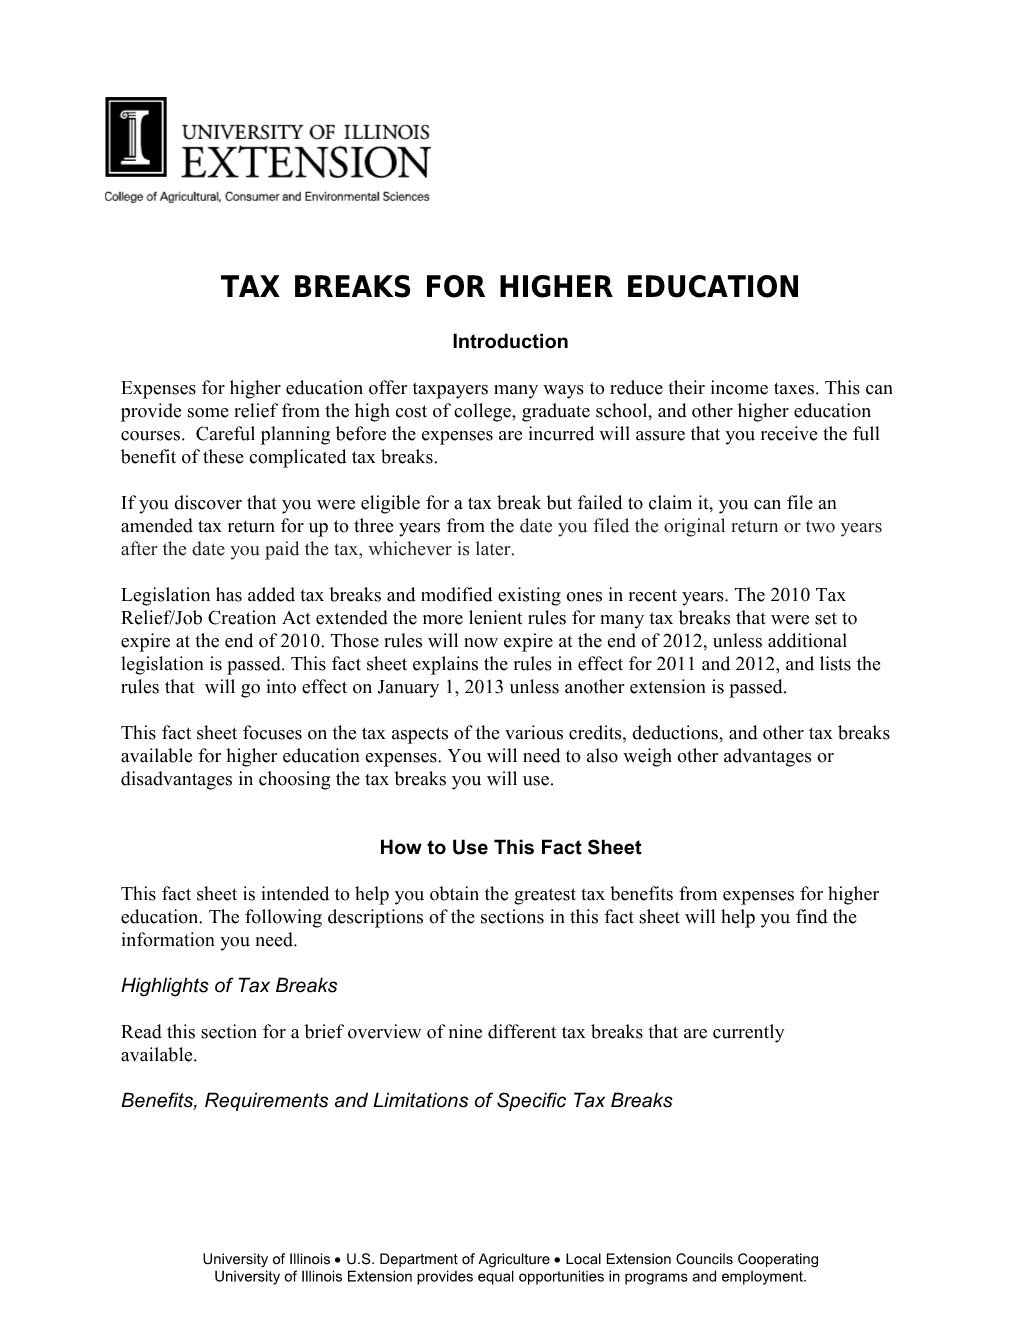 Tax Breaks for Higher Education